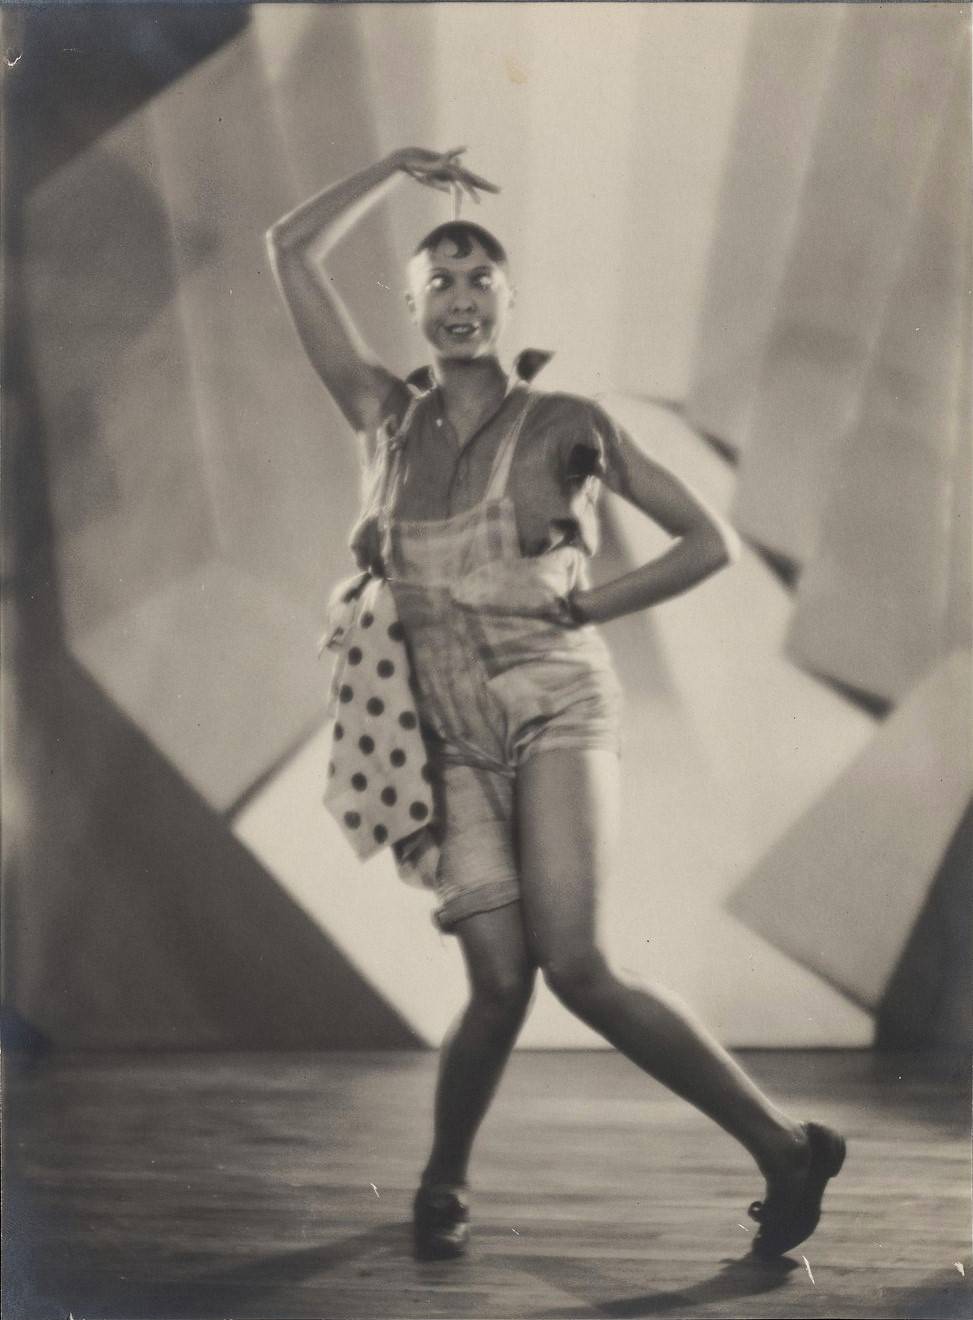 Fot. Josephine Baker, Paryż, 1927 (© James Weldon Johnson Memorial Collection of Negro Arts and Letters, Yale University)